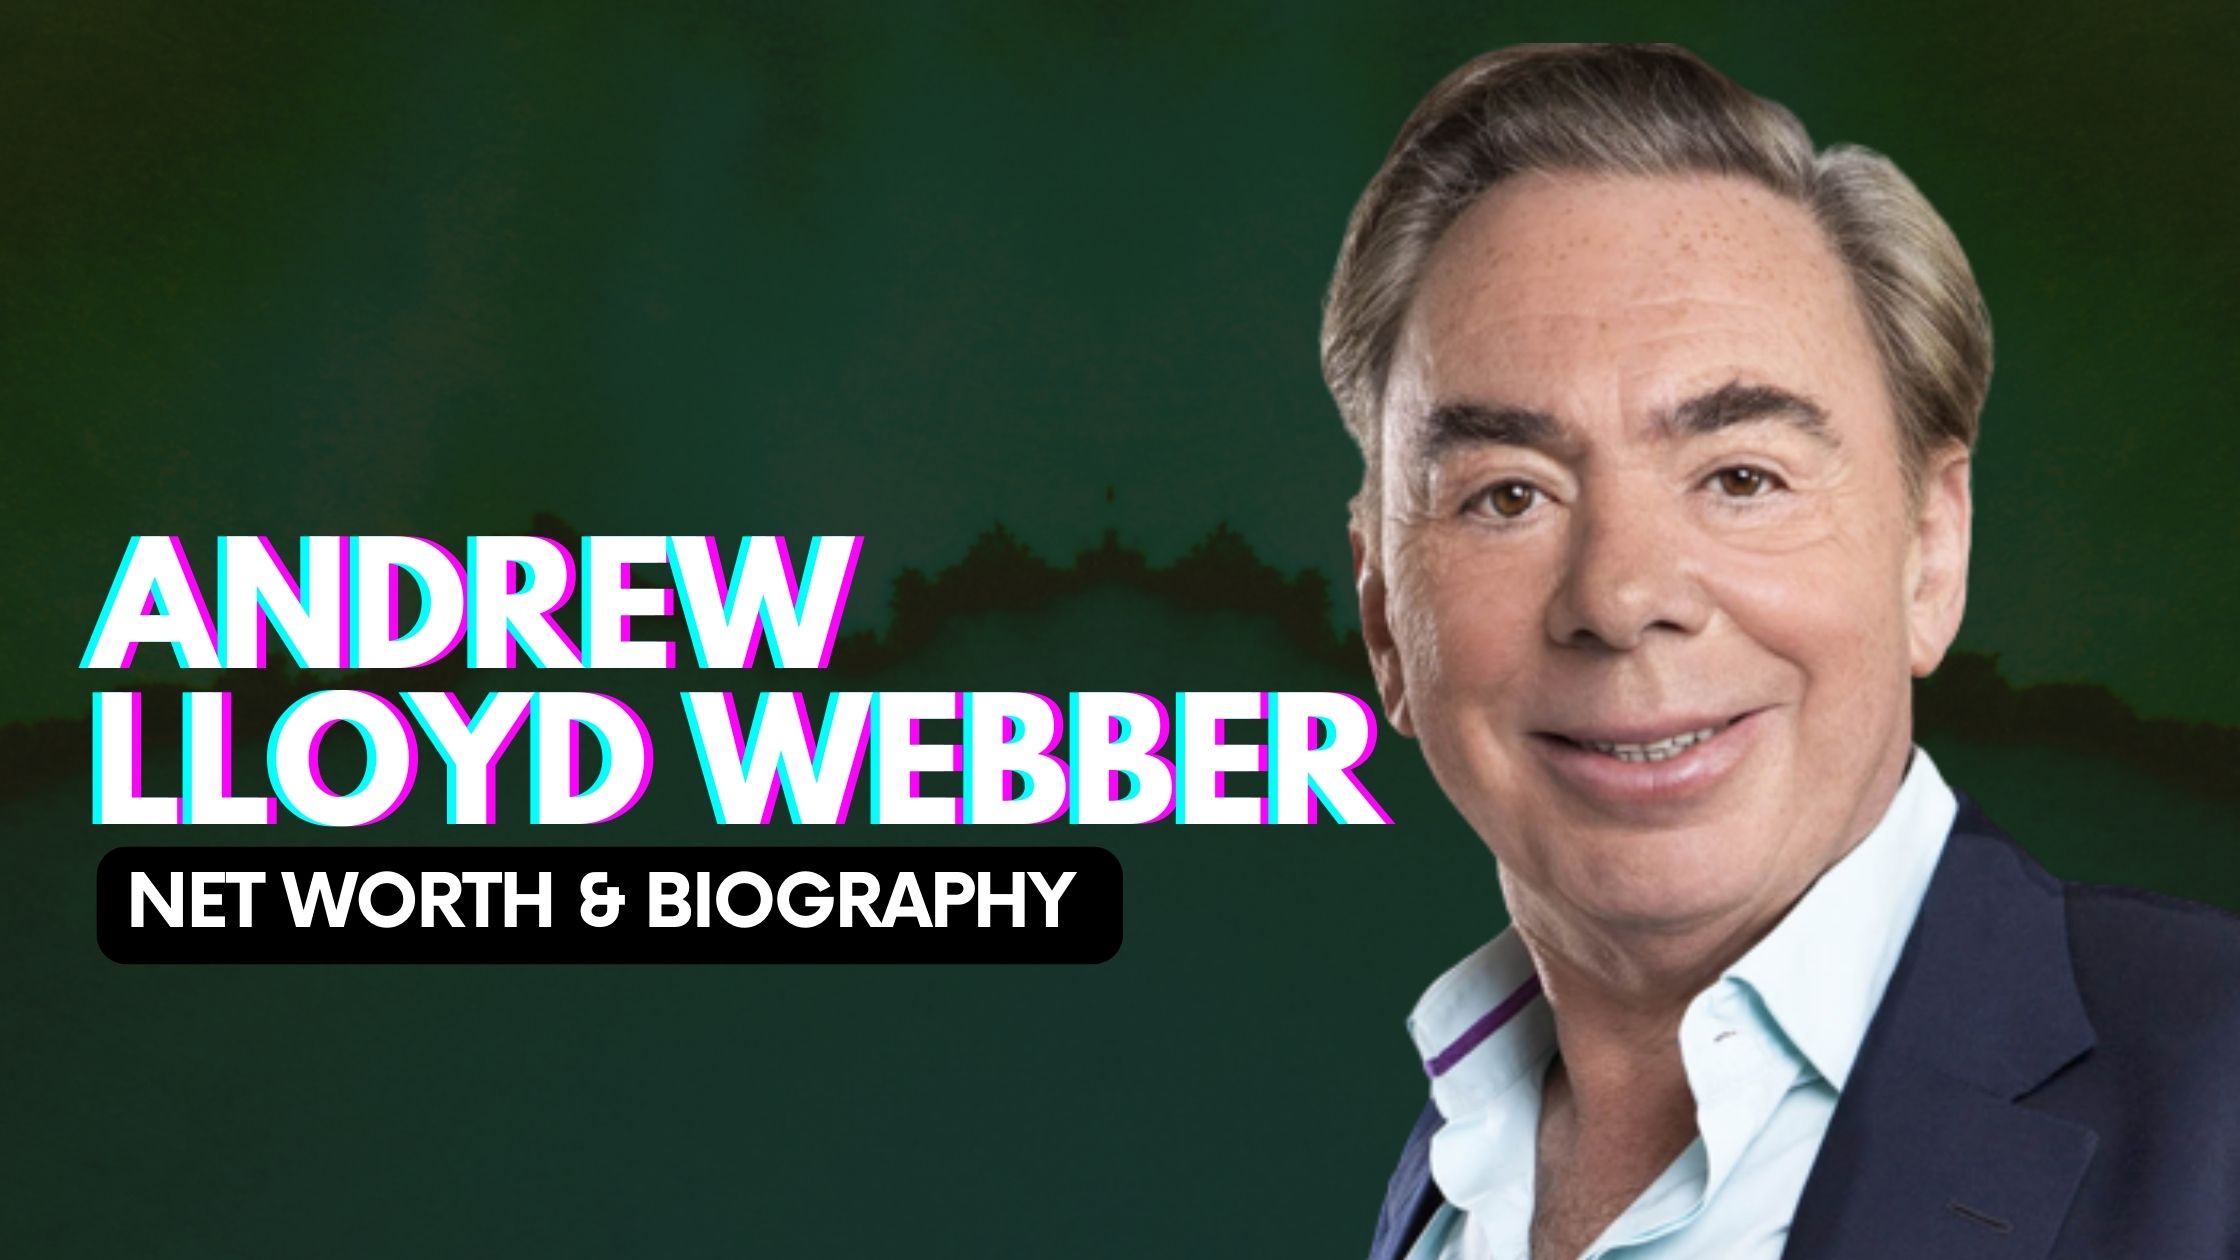 Andrew Lloyd Webber Net Worth